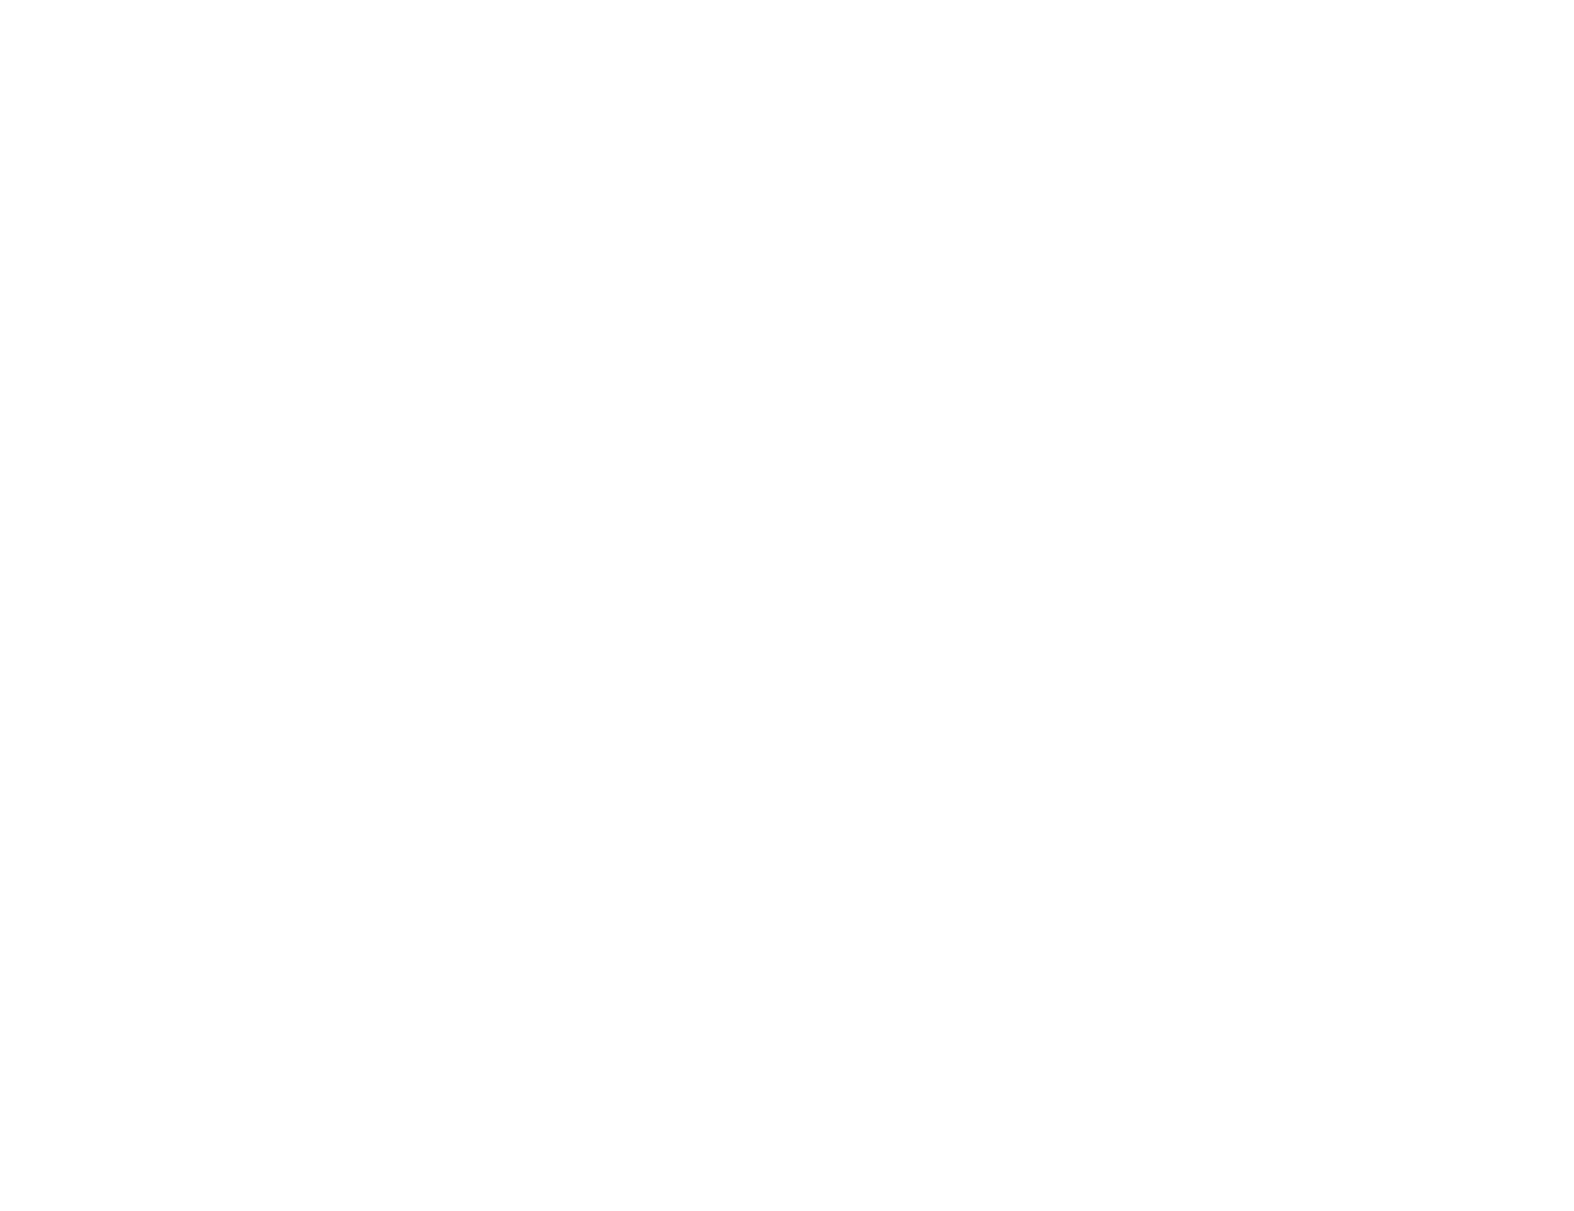 International Games System logo pour fonds sombres (PNG transparent)